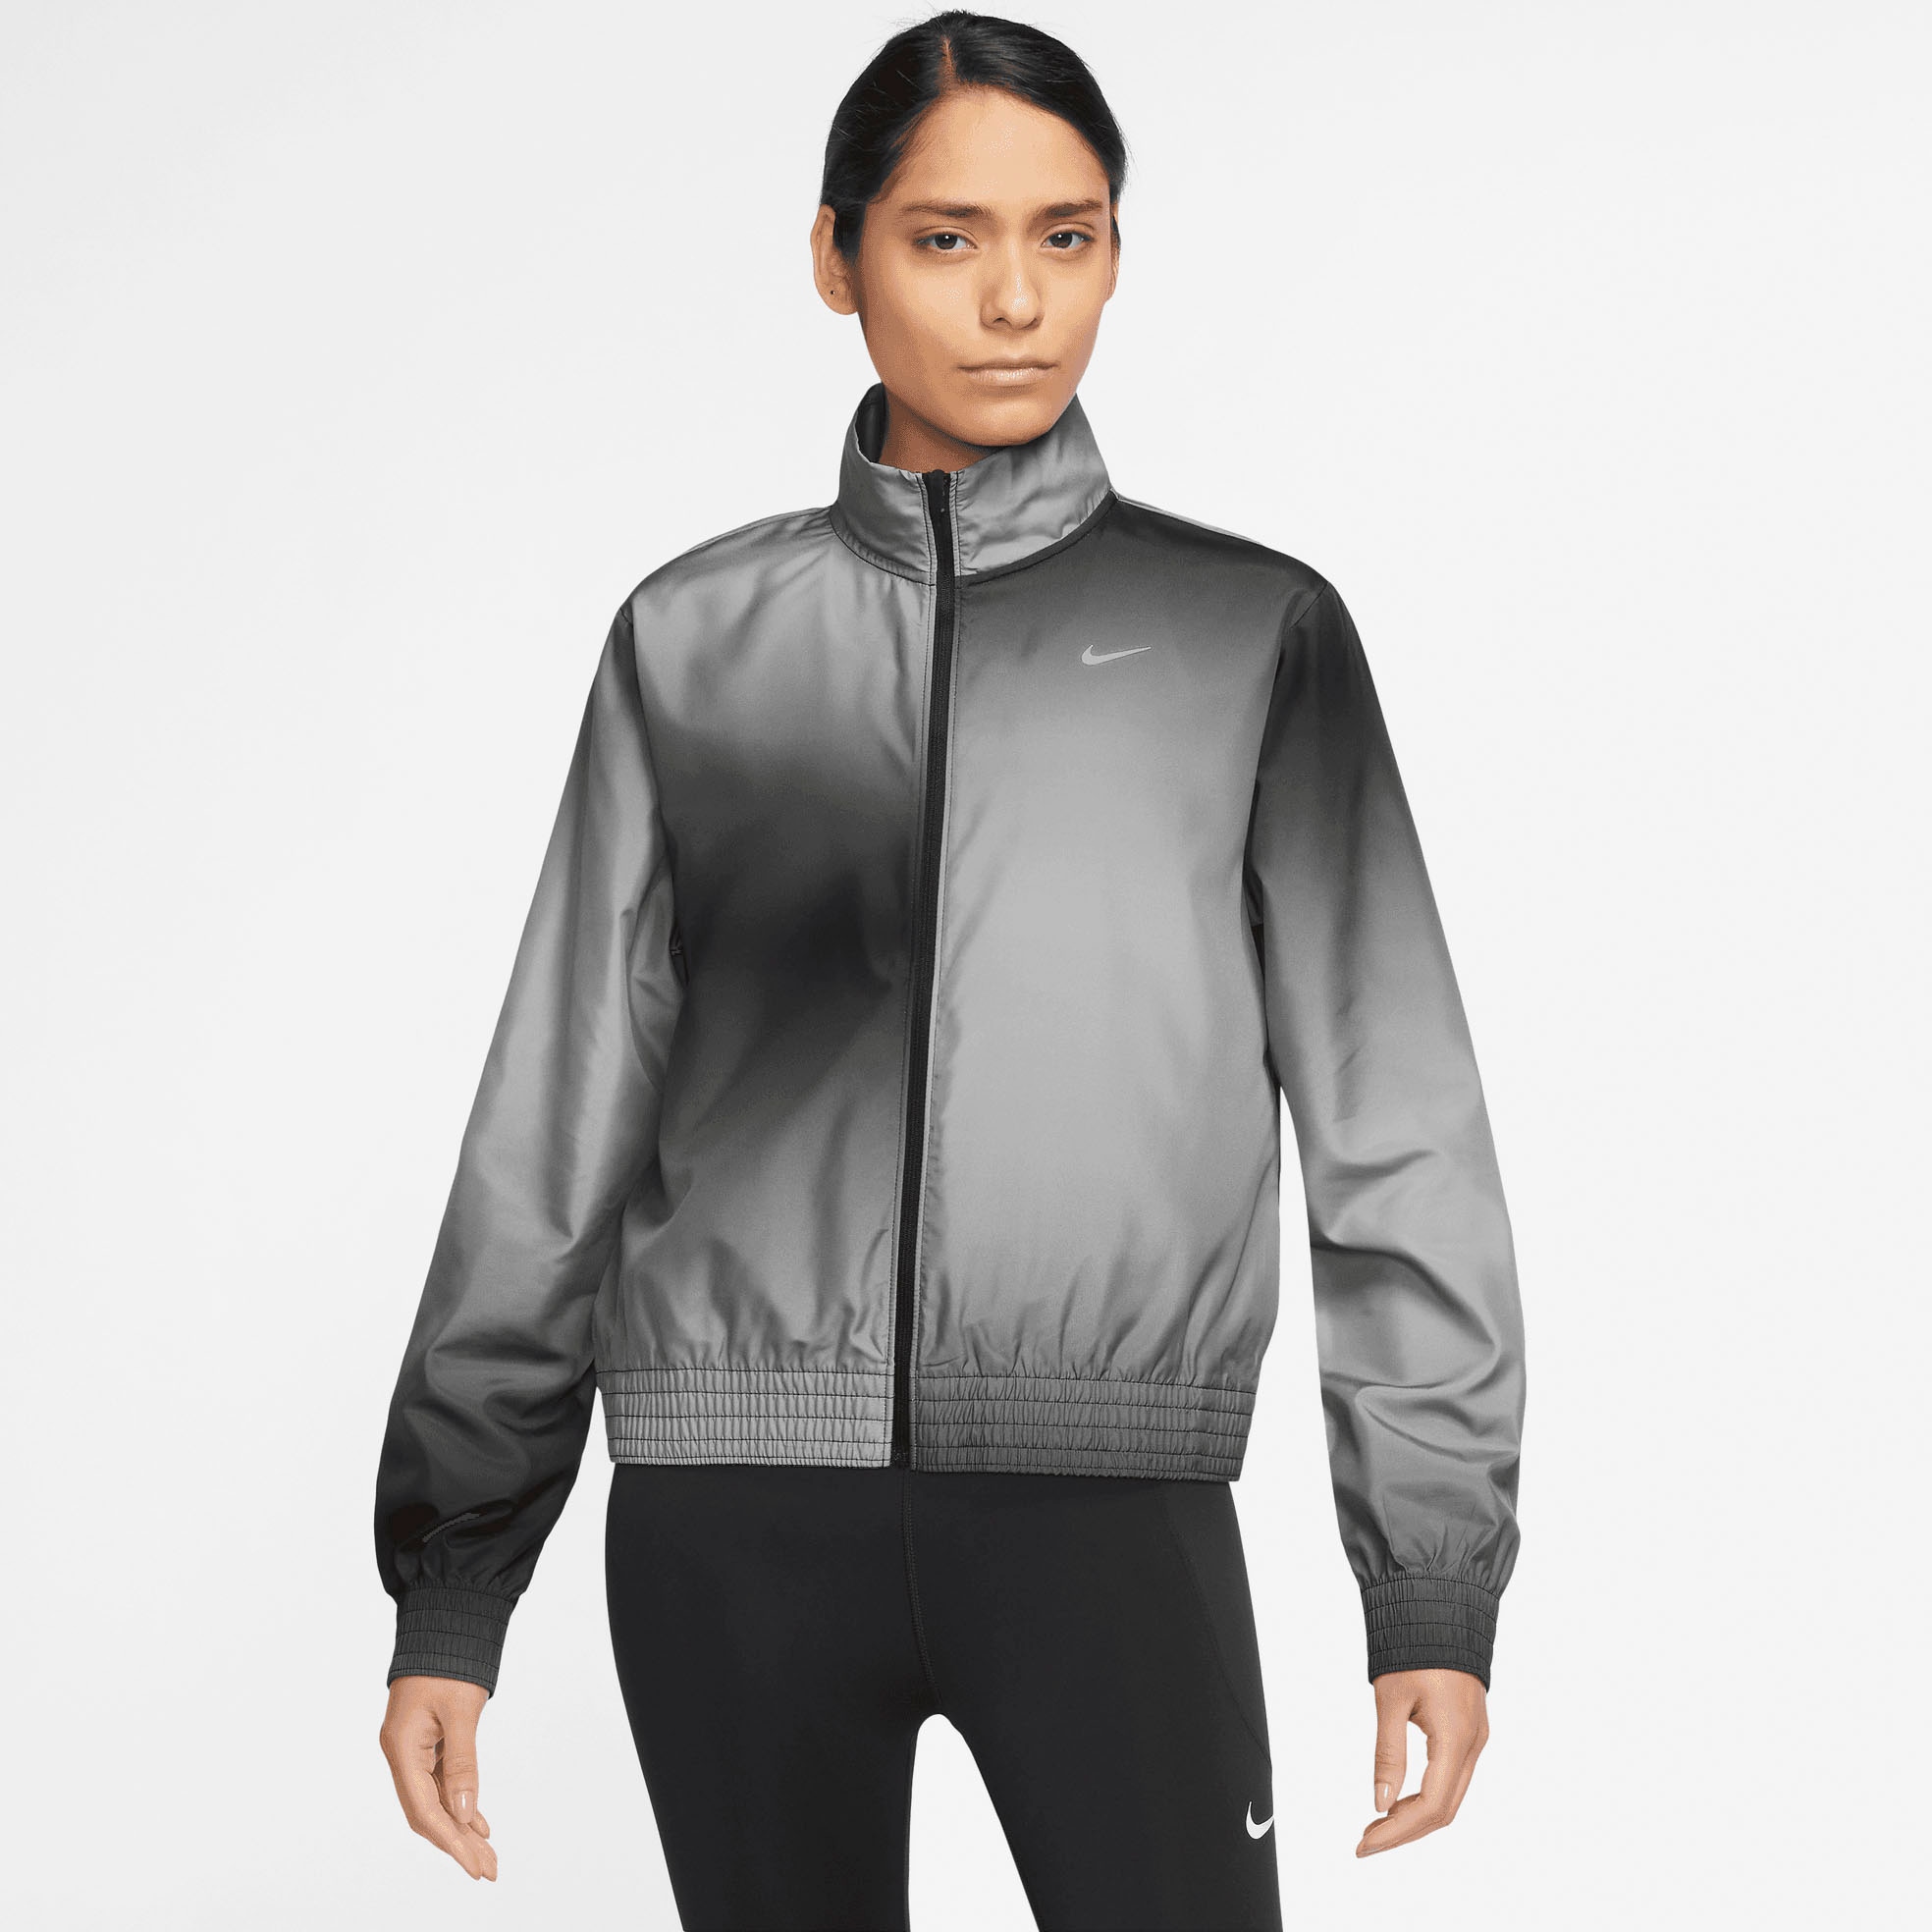 Women\'s Swoosh Printed Run Entdecke »Dri-FIT Running Jacket« Nike auf Laufjacke